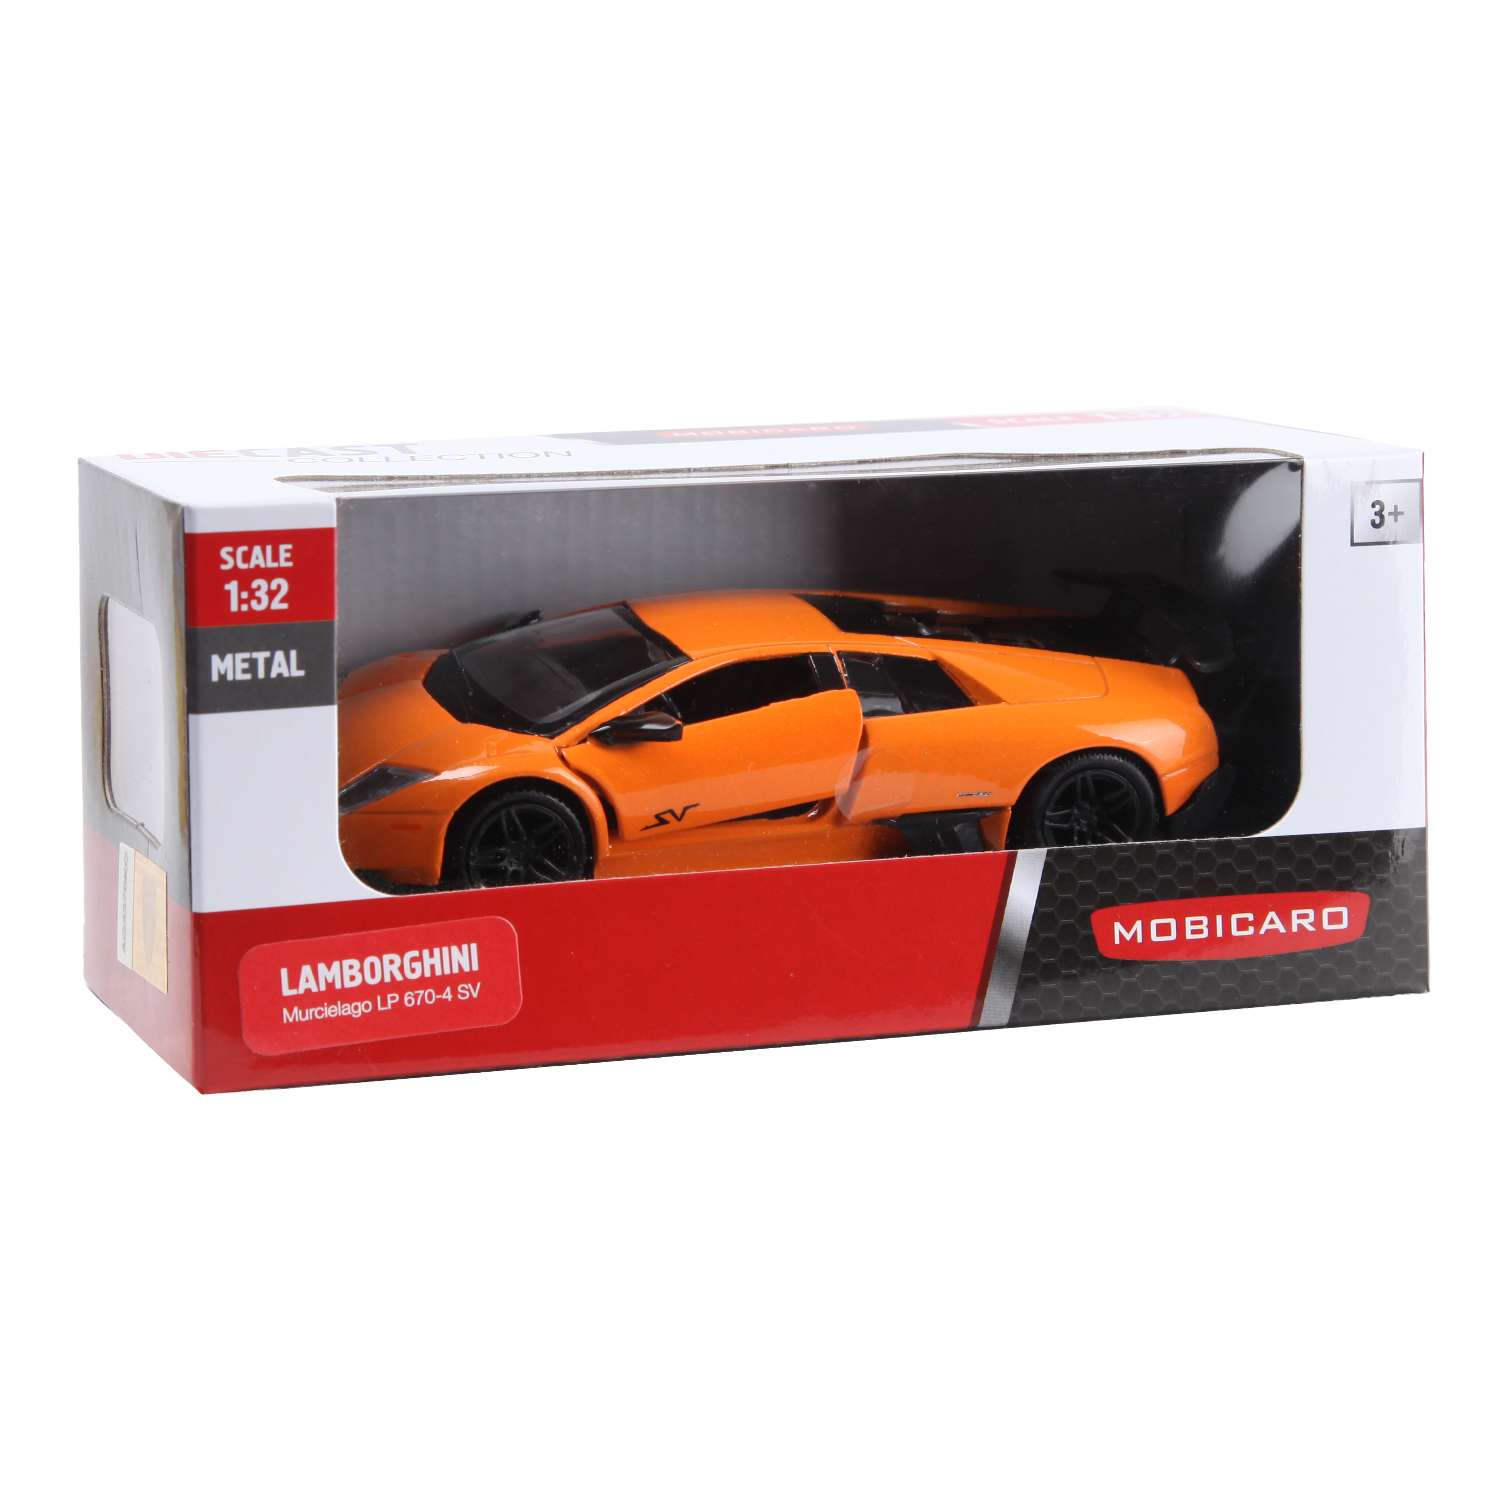 Машинка Mobicaro Lamborghini Murcielago 1:32-39 в ассортименте 544997 - фото 2